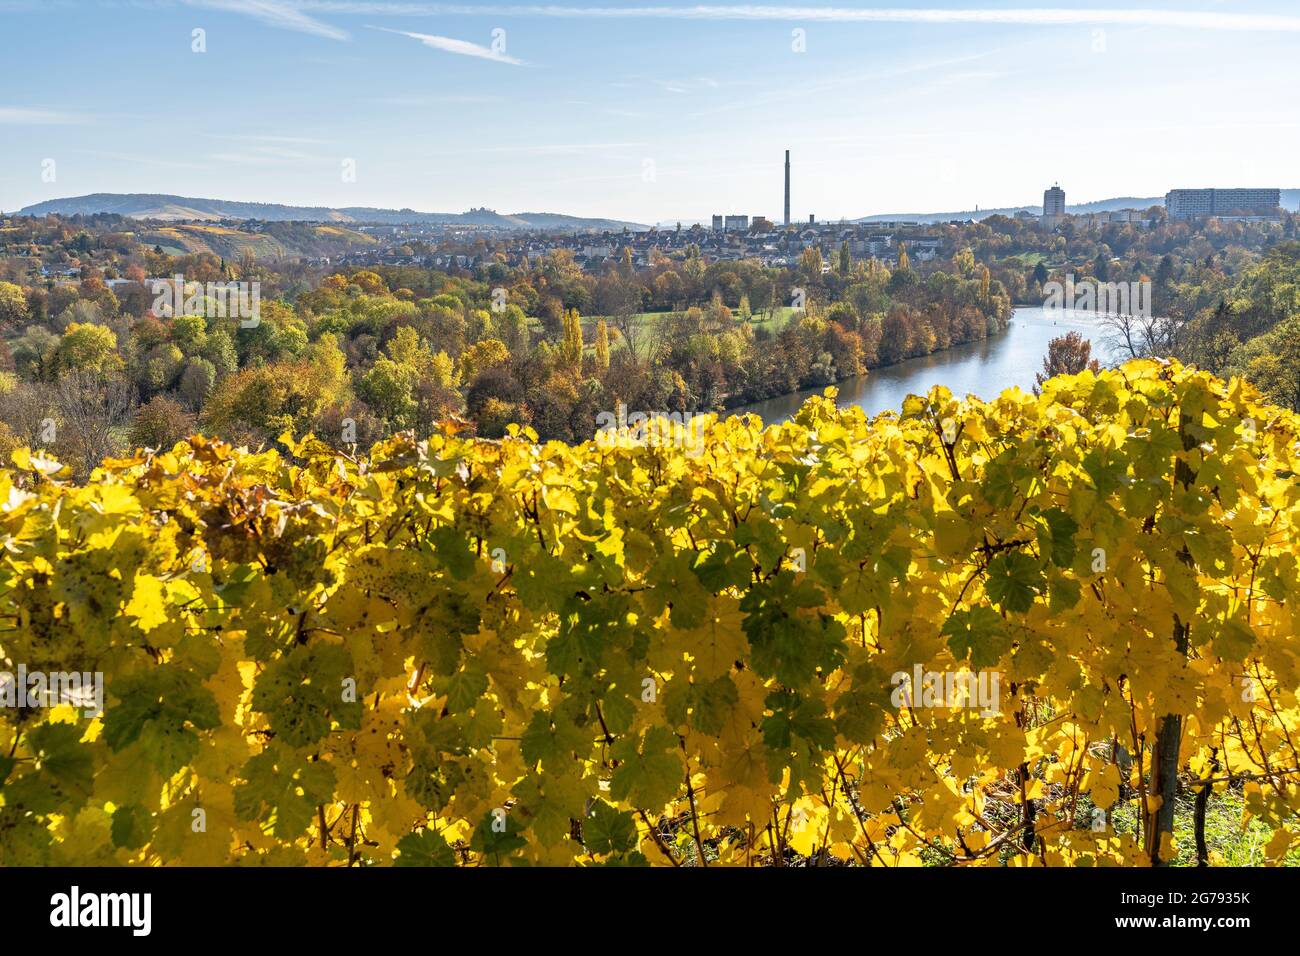 Europe, Germany, Baden-Wuerttemberg, Stuttgart, view from the autumnal vineyard Cannstatter Zuckerle on the Neckar Stock Photo